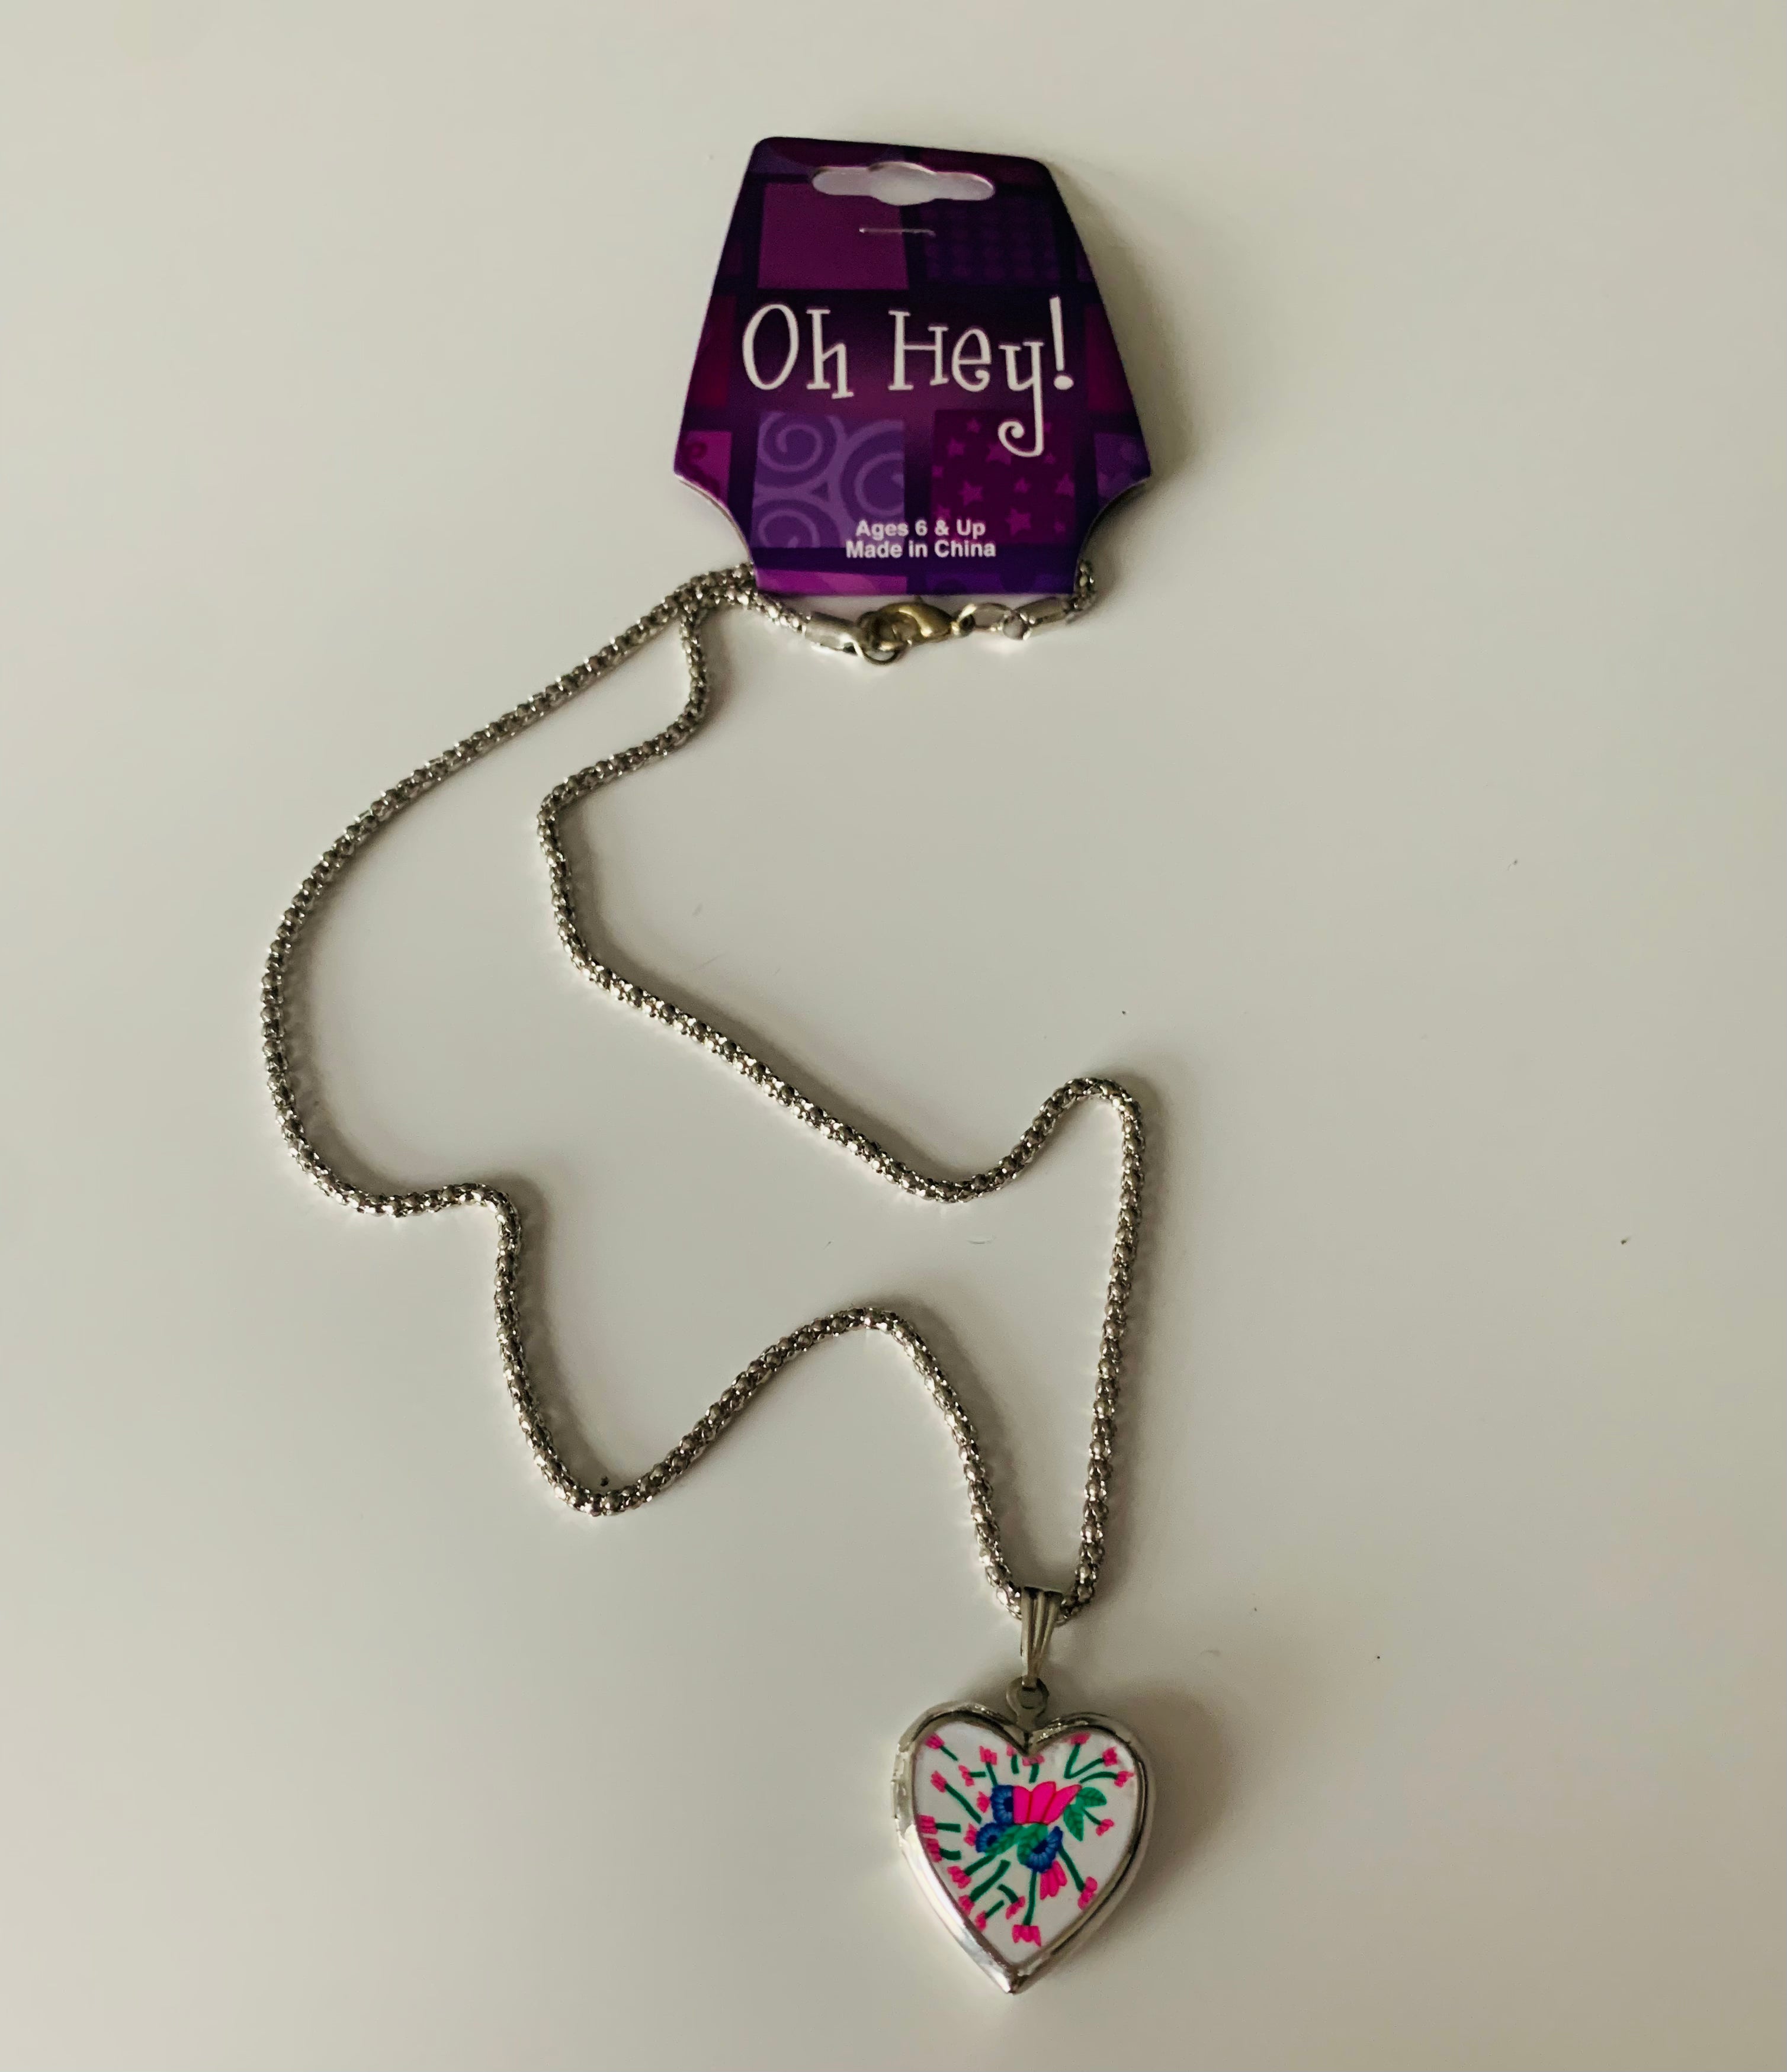 Heart Locket Necklace